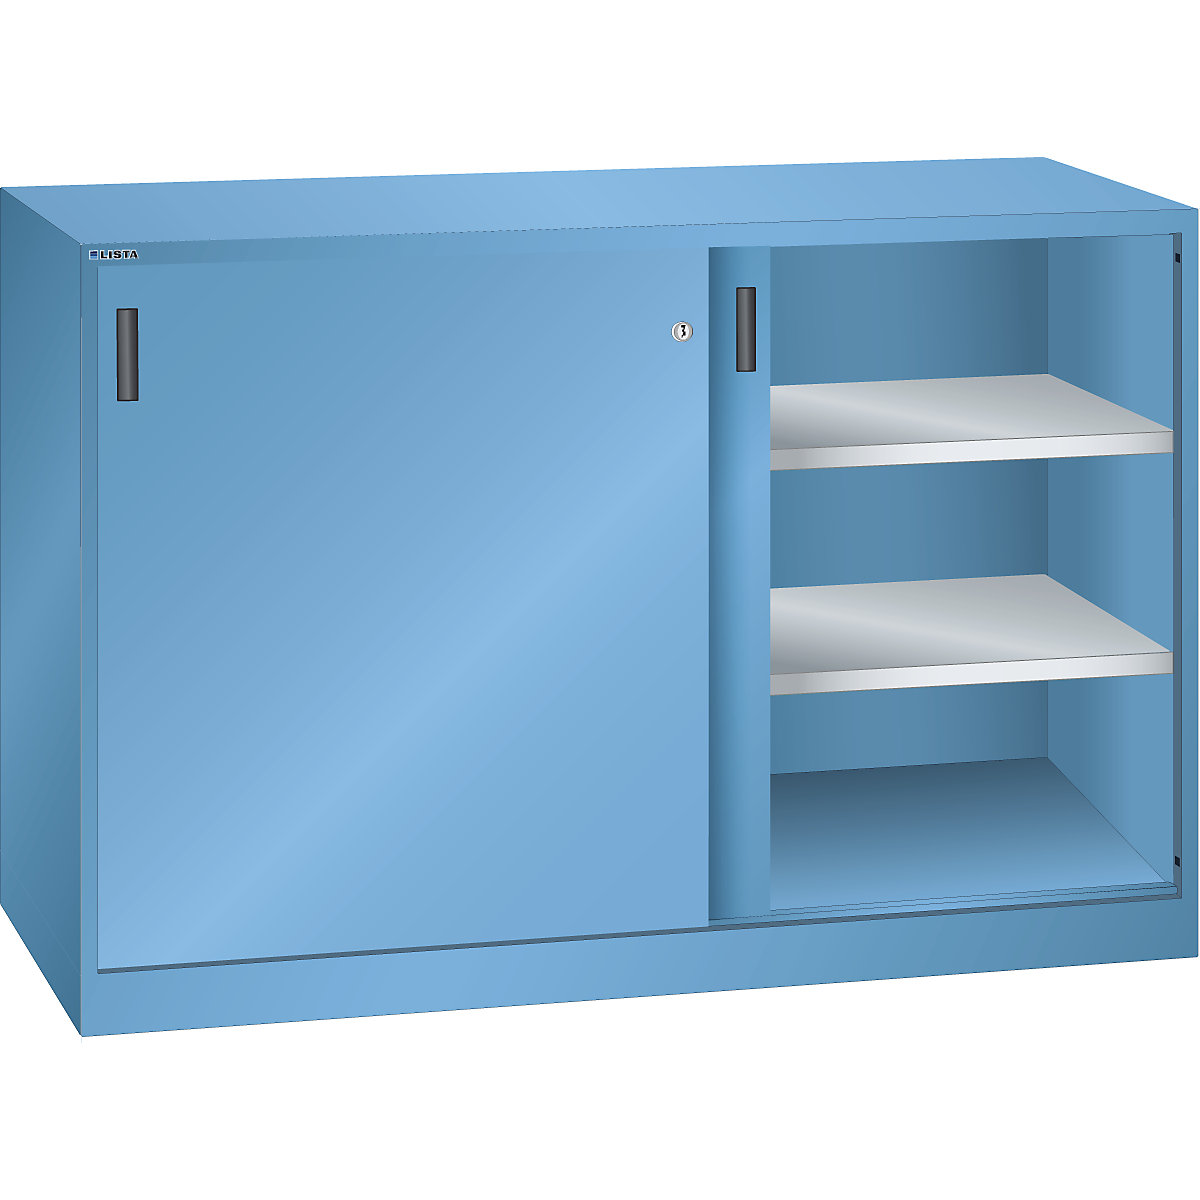 Sliding door cupboard – LISTA, HxW 1000 x 1500 mm, partition, depth 500 mm, light blue RAL 5012-9